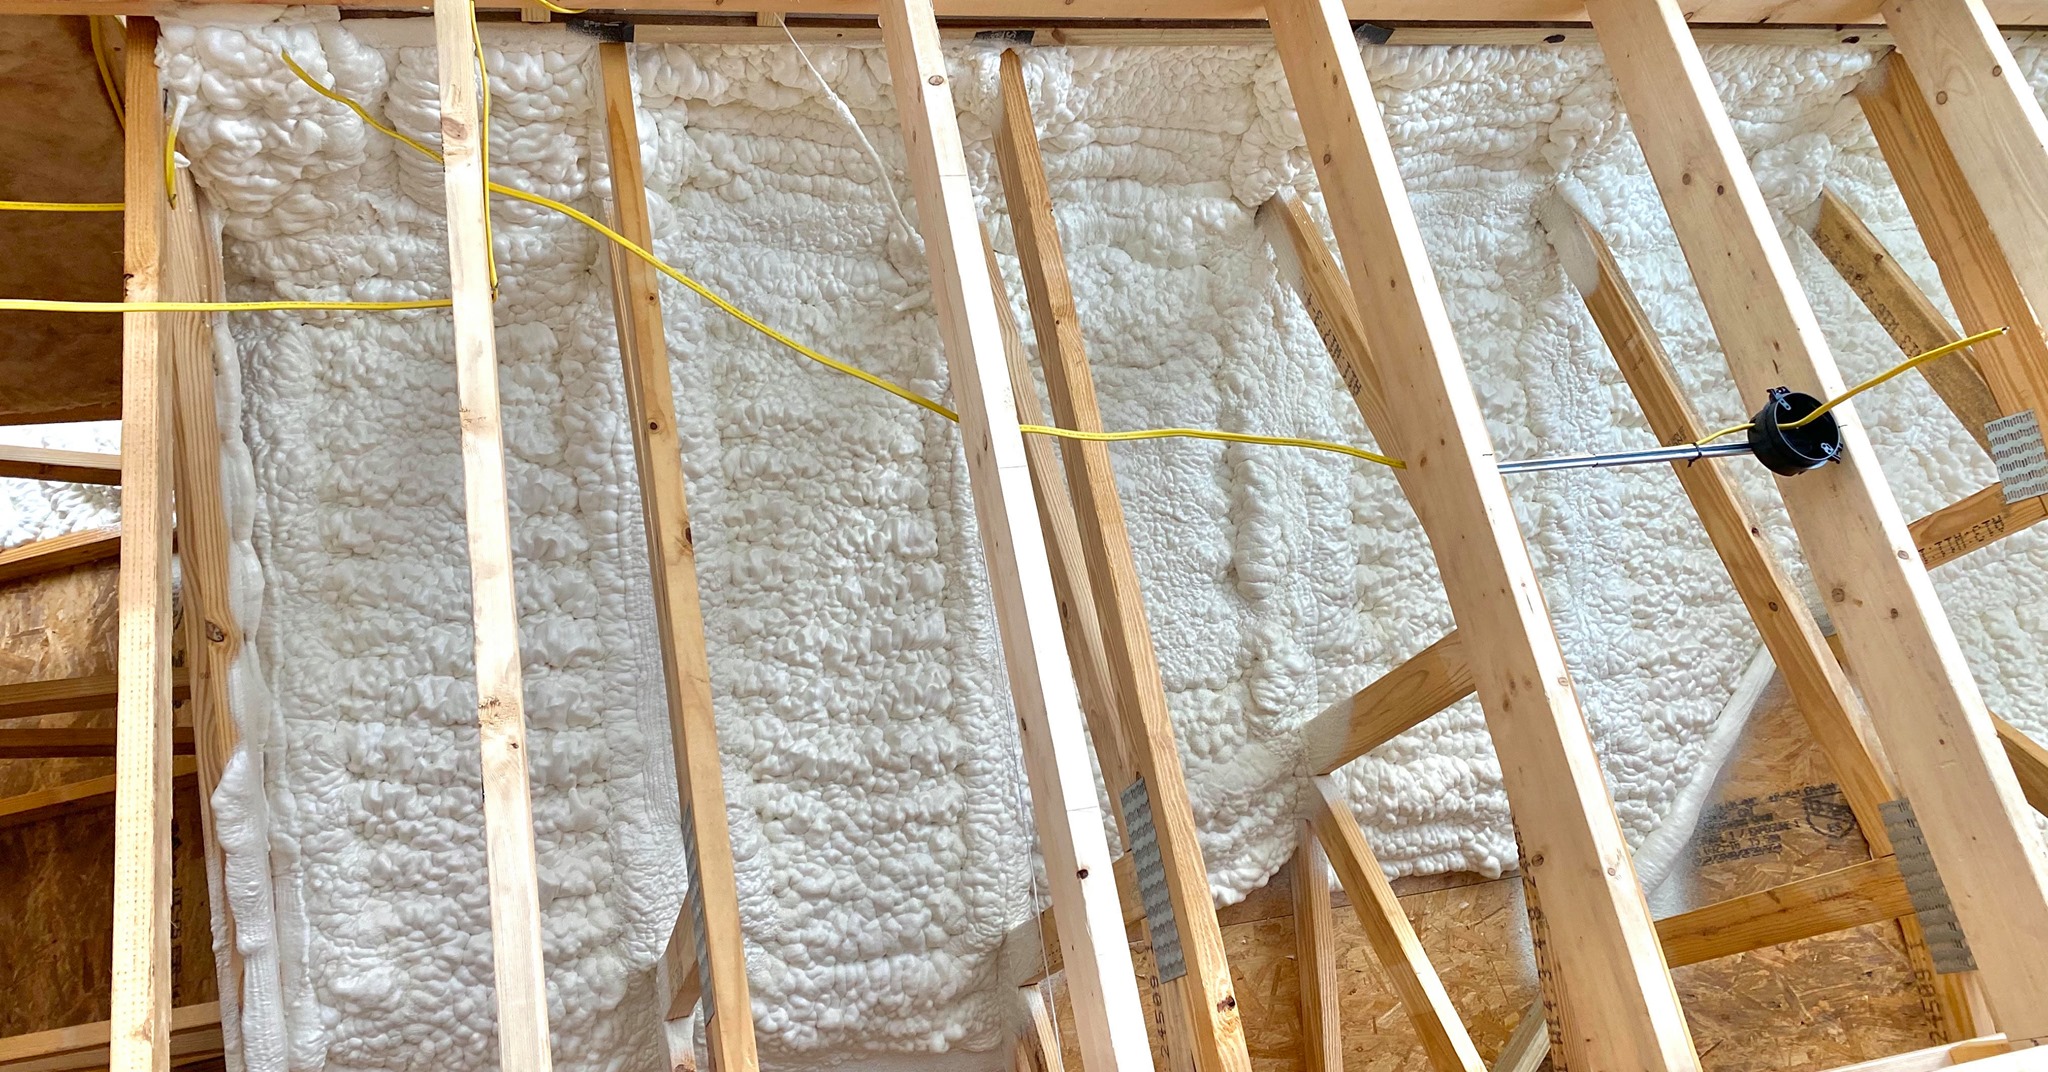 How to start a spray foam insulation business?